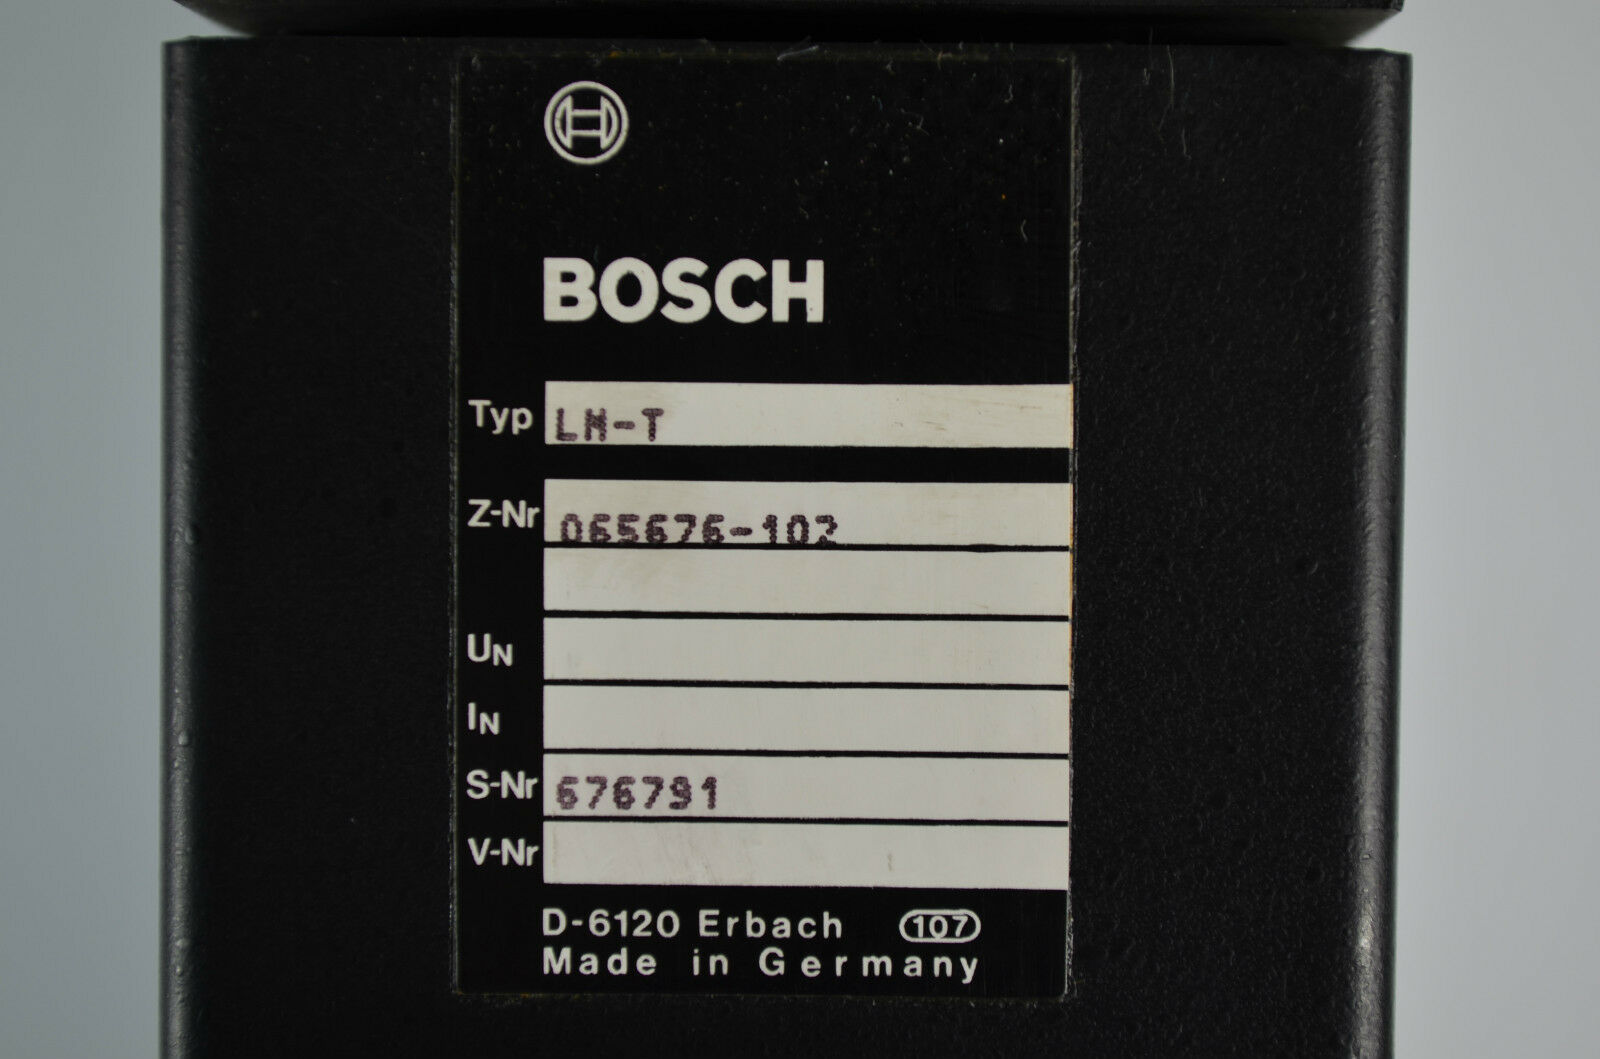 Bosch LM-T 065676-102